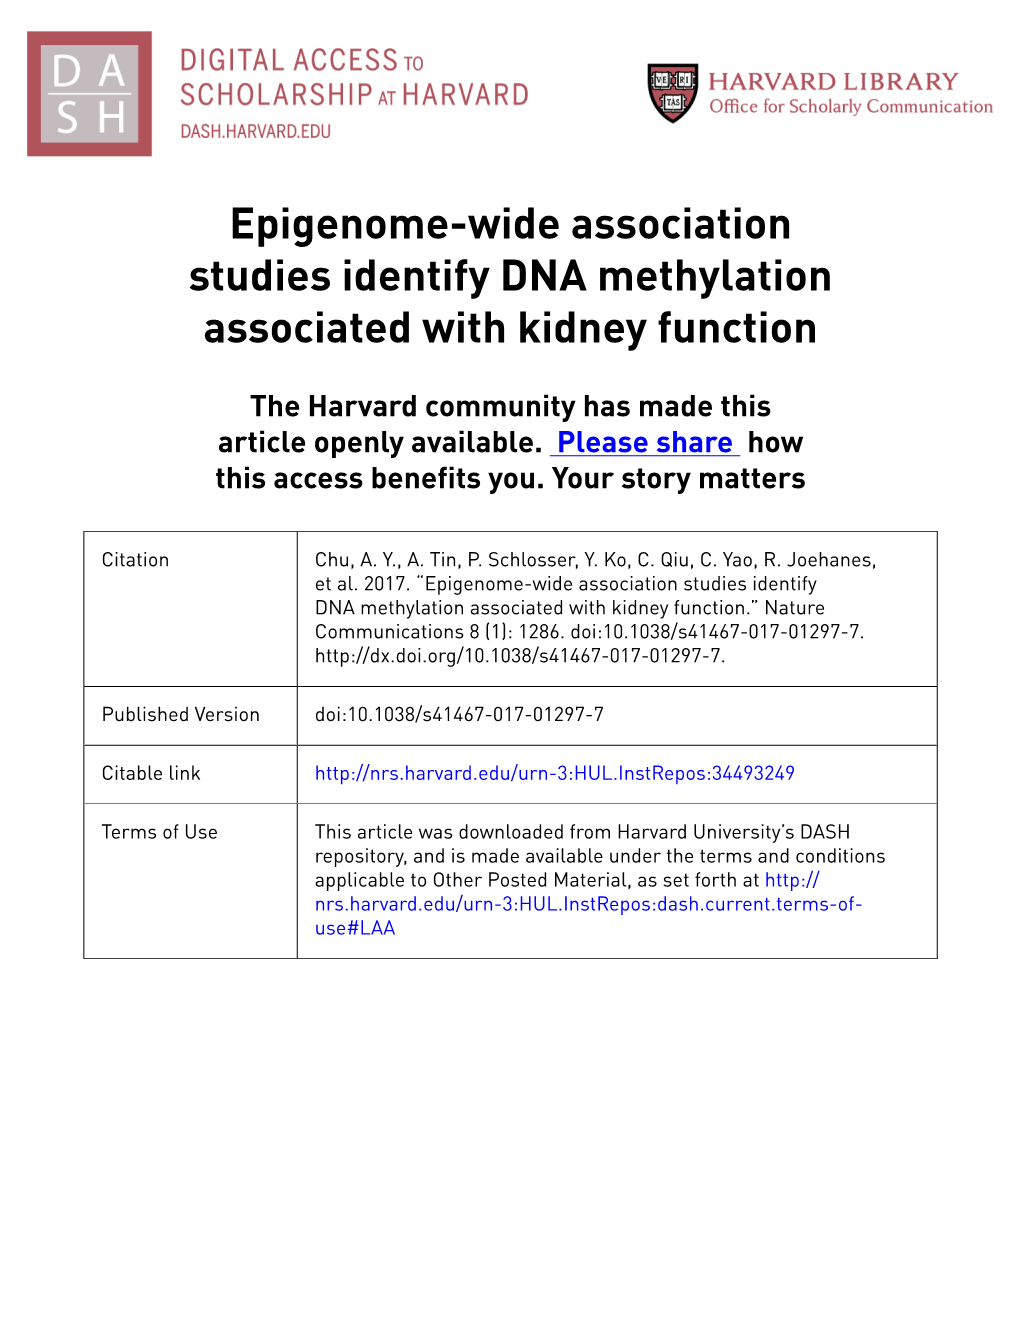 Epigenome-Wide Association Studies Identify DNA Methylation Associated with Kidney Function